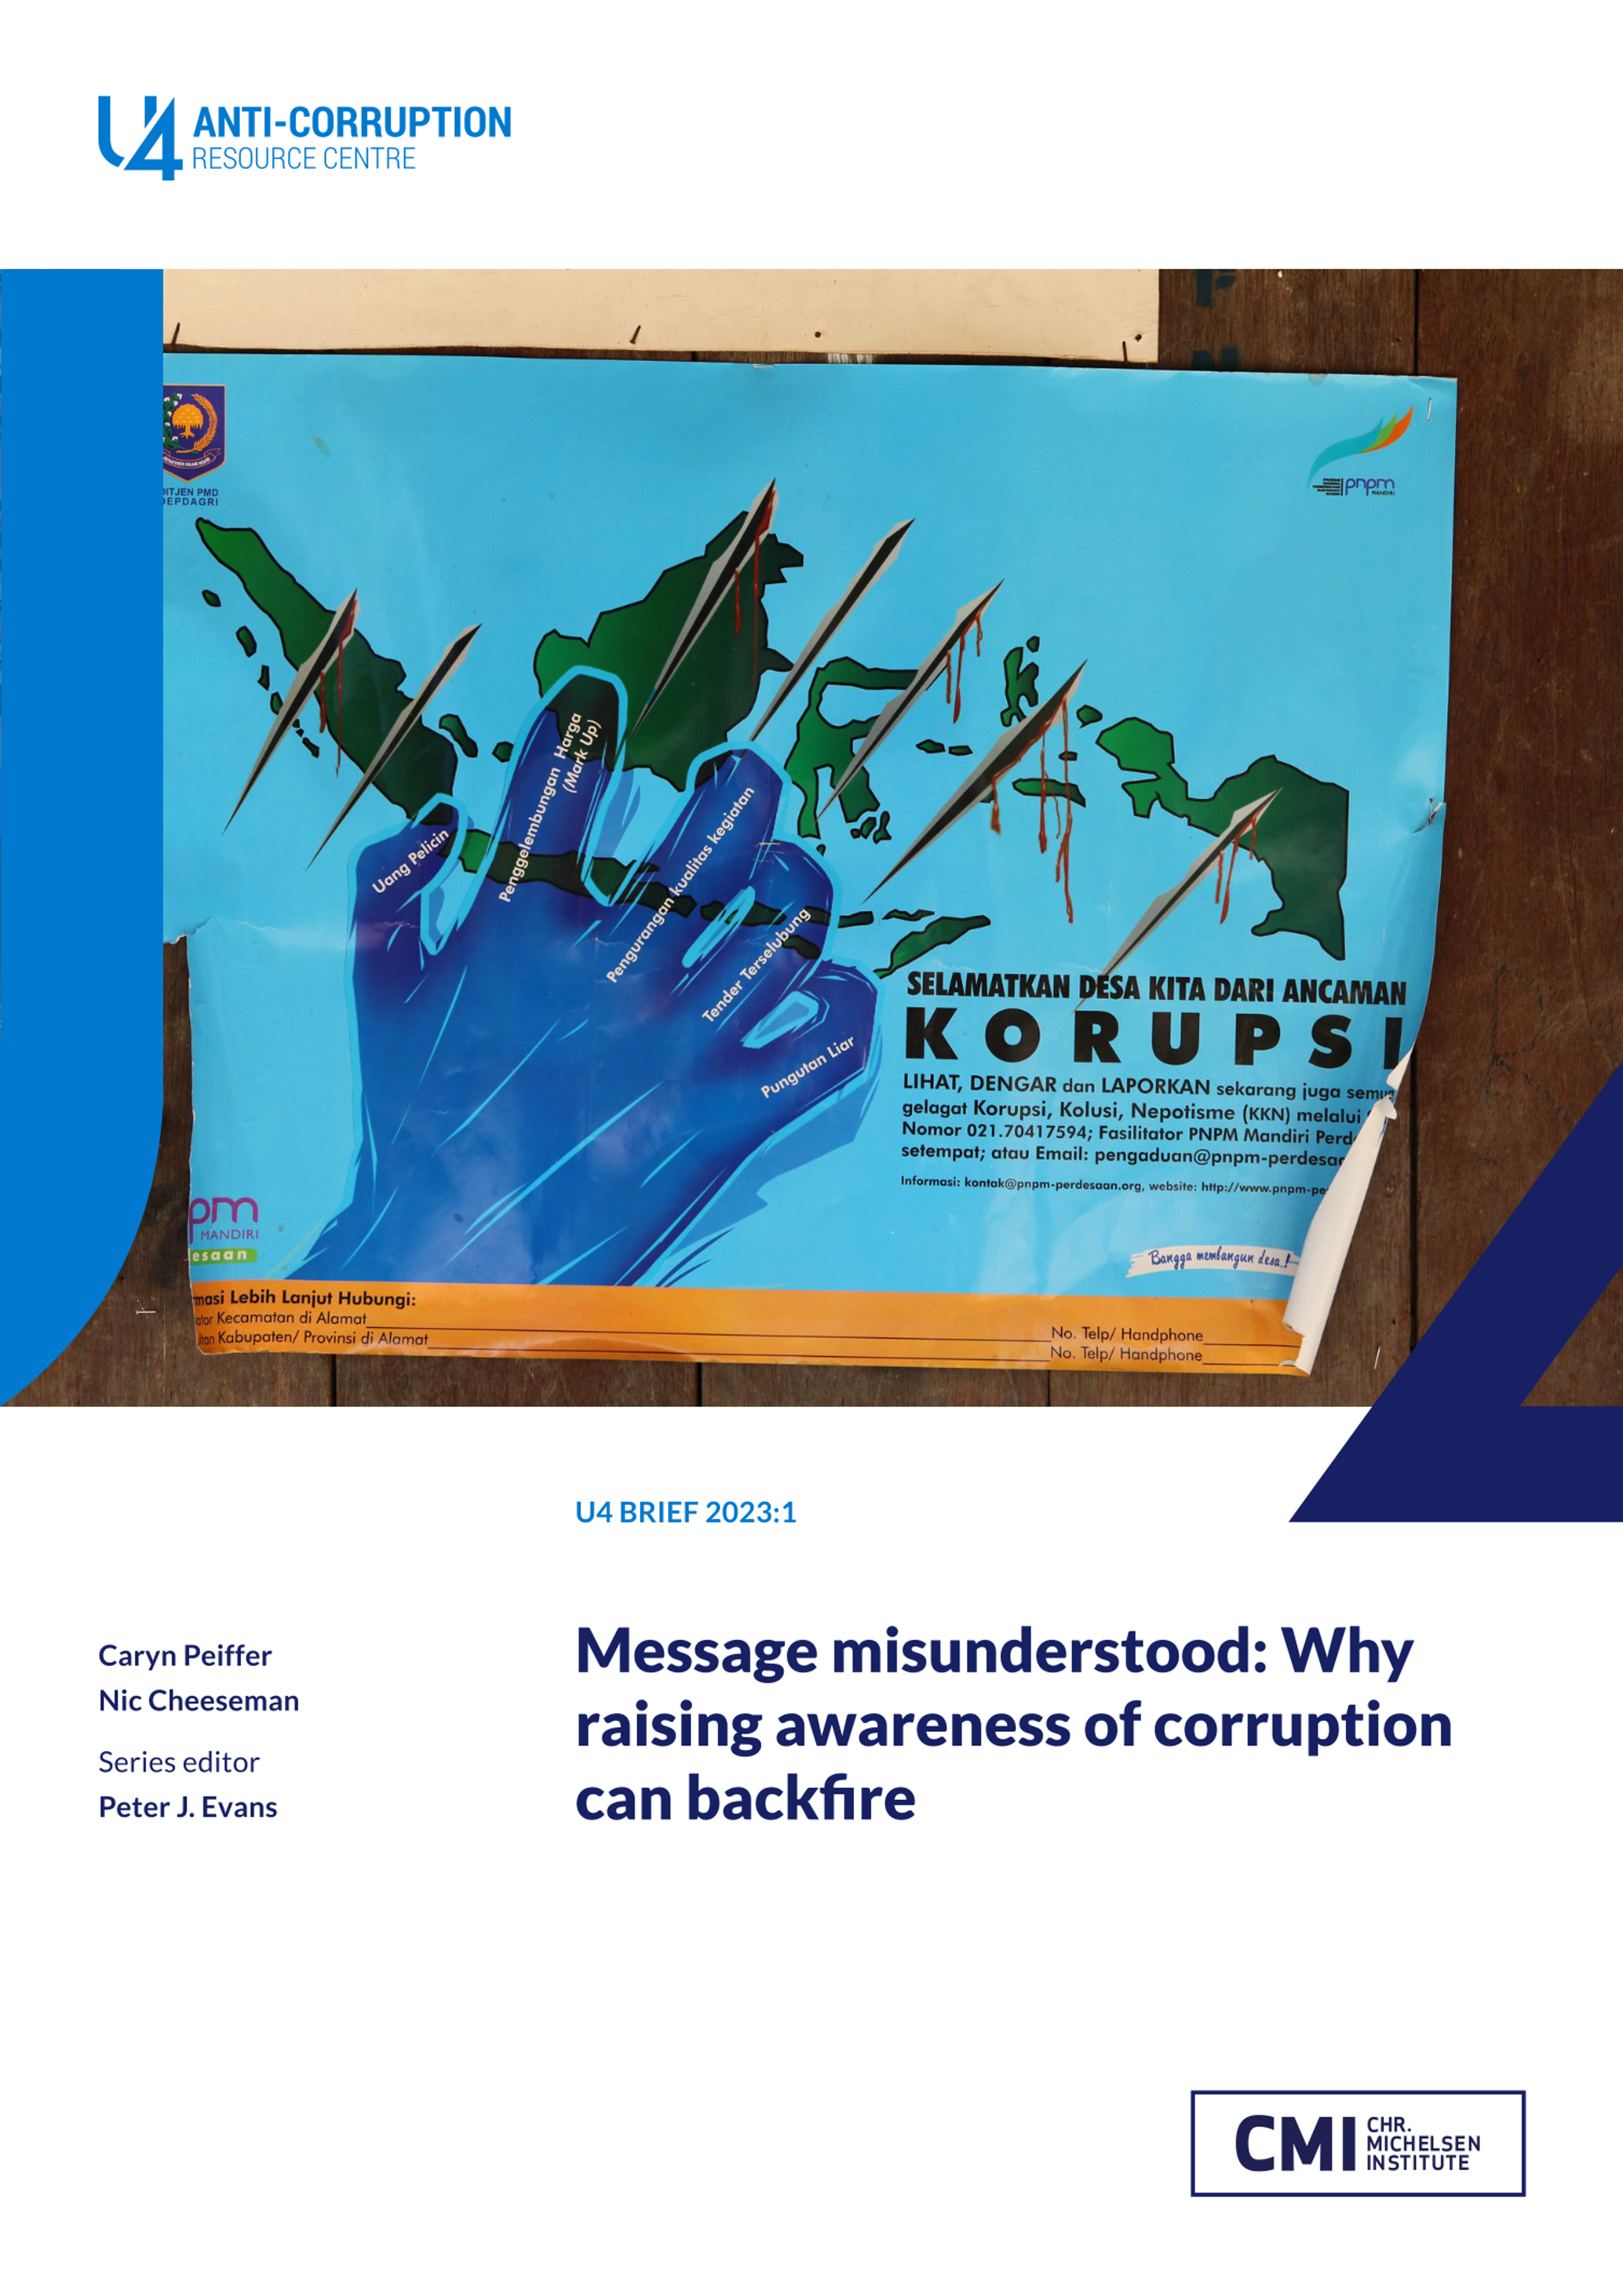 Message misunderstood: Why raising awareness of corruption can backfire